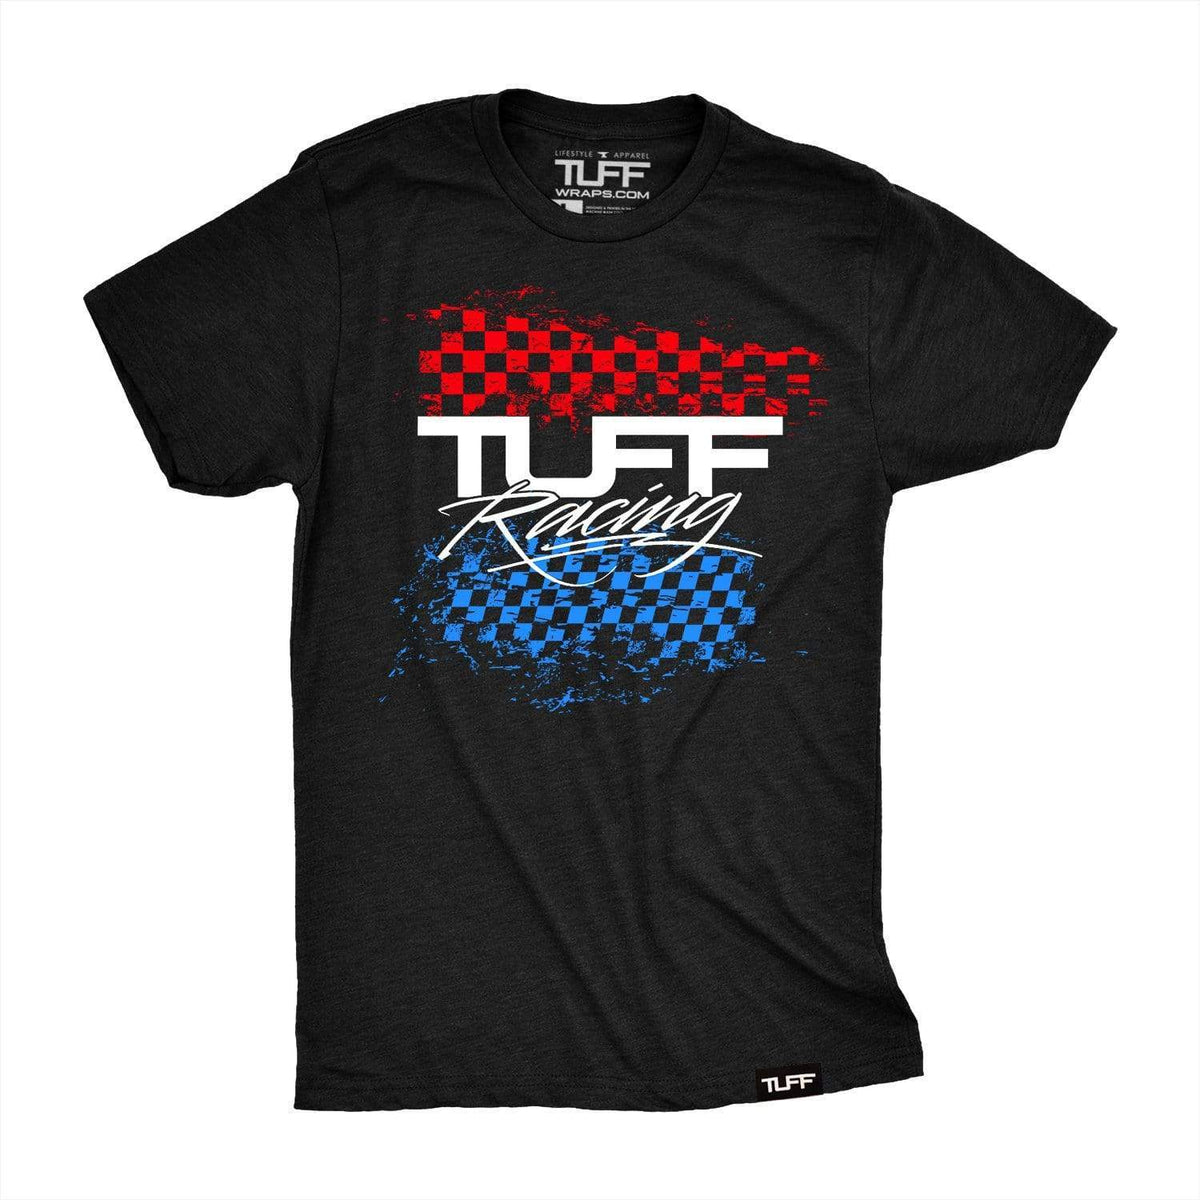 TUFF Racing Tee S / Black V4 TuffWraps.com